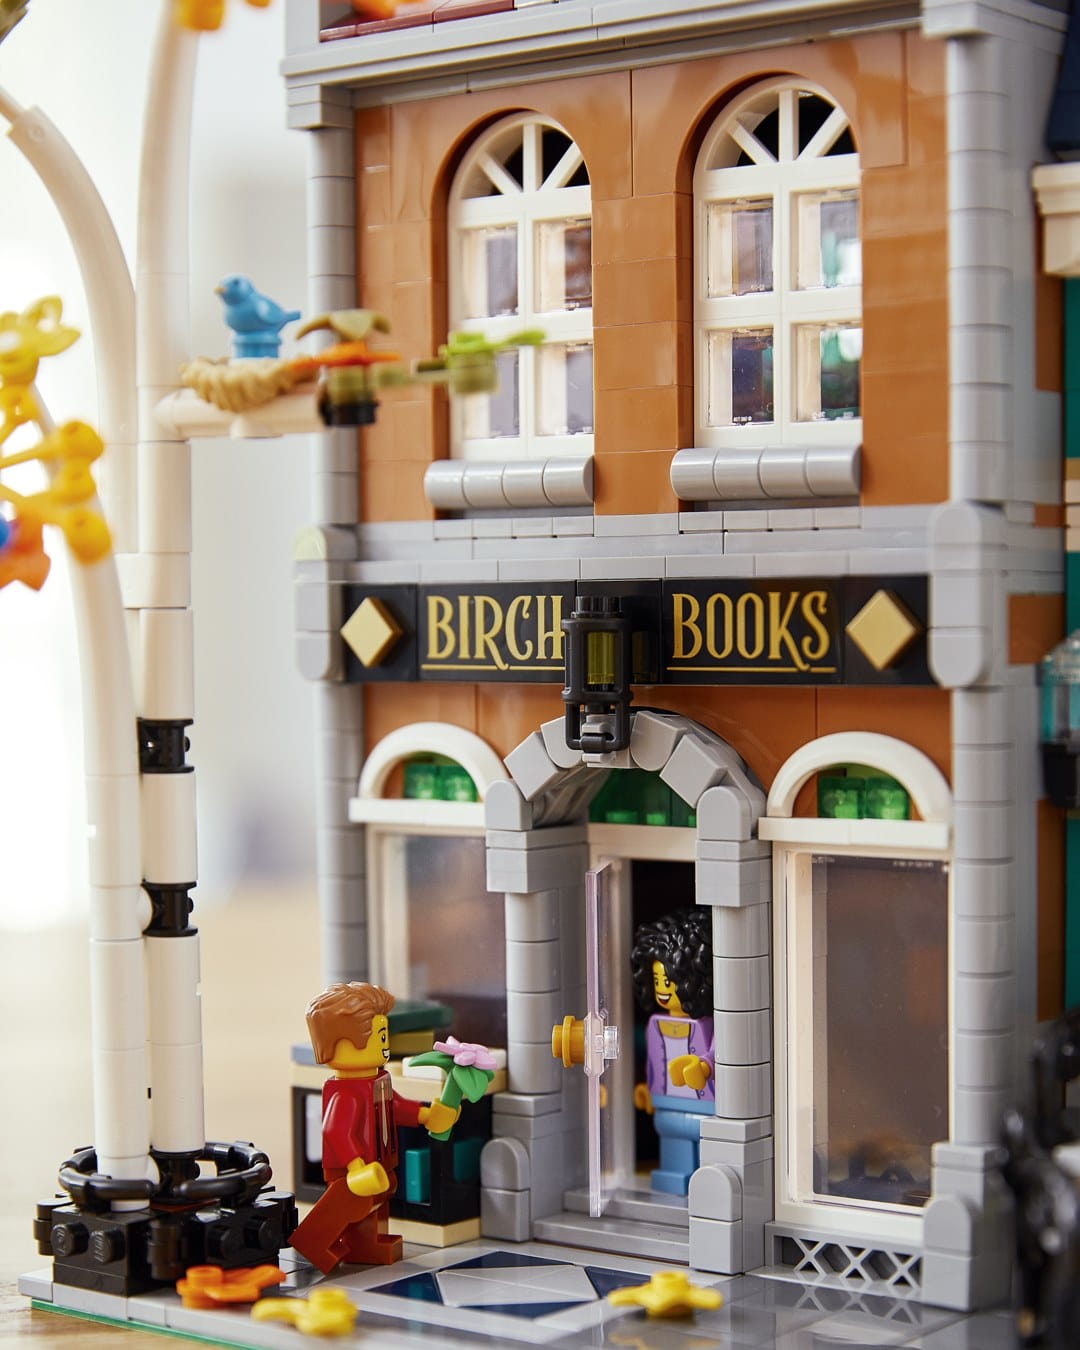 LEGO 10270 Buchhandlung Modular Building